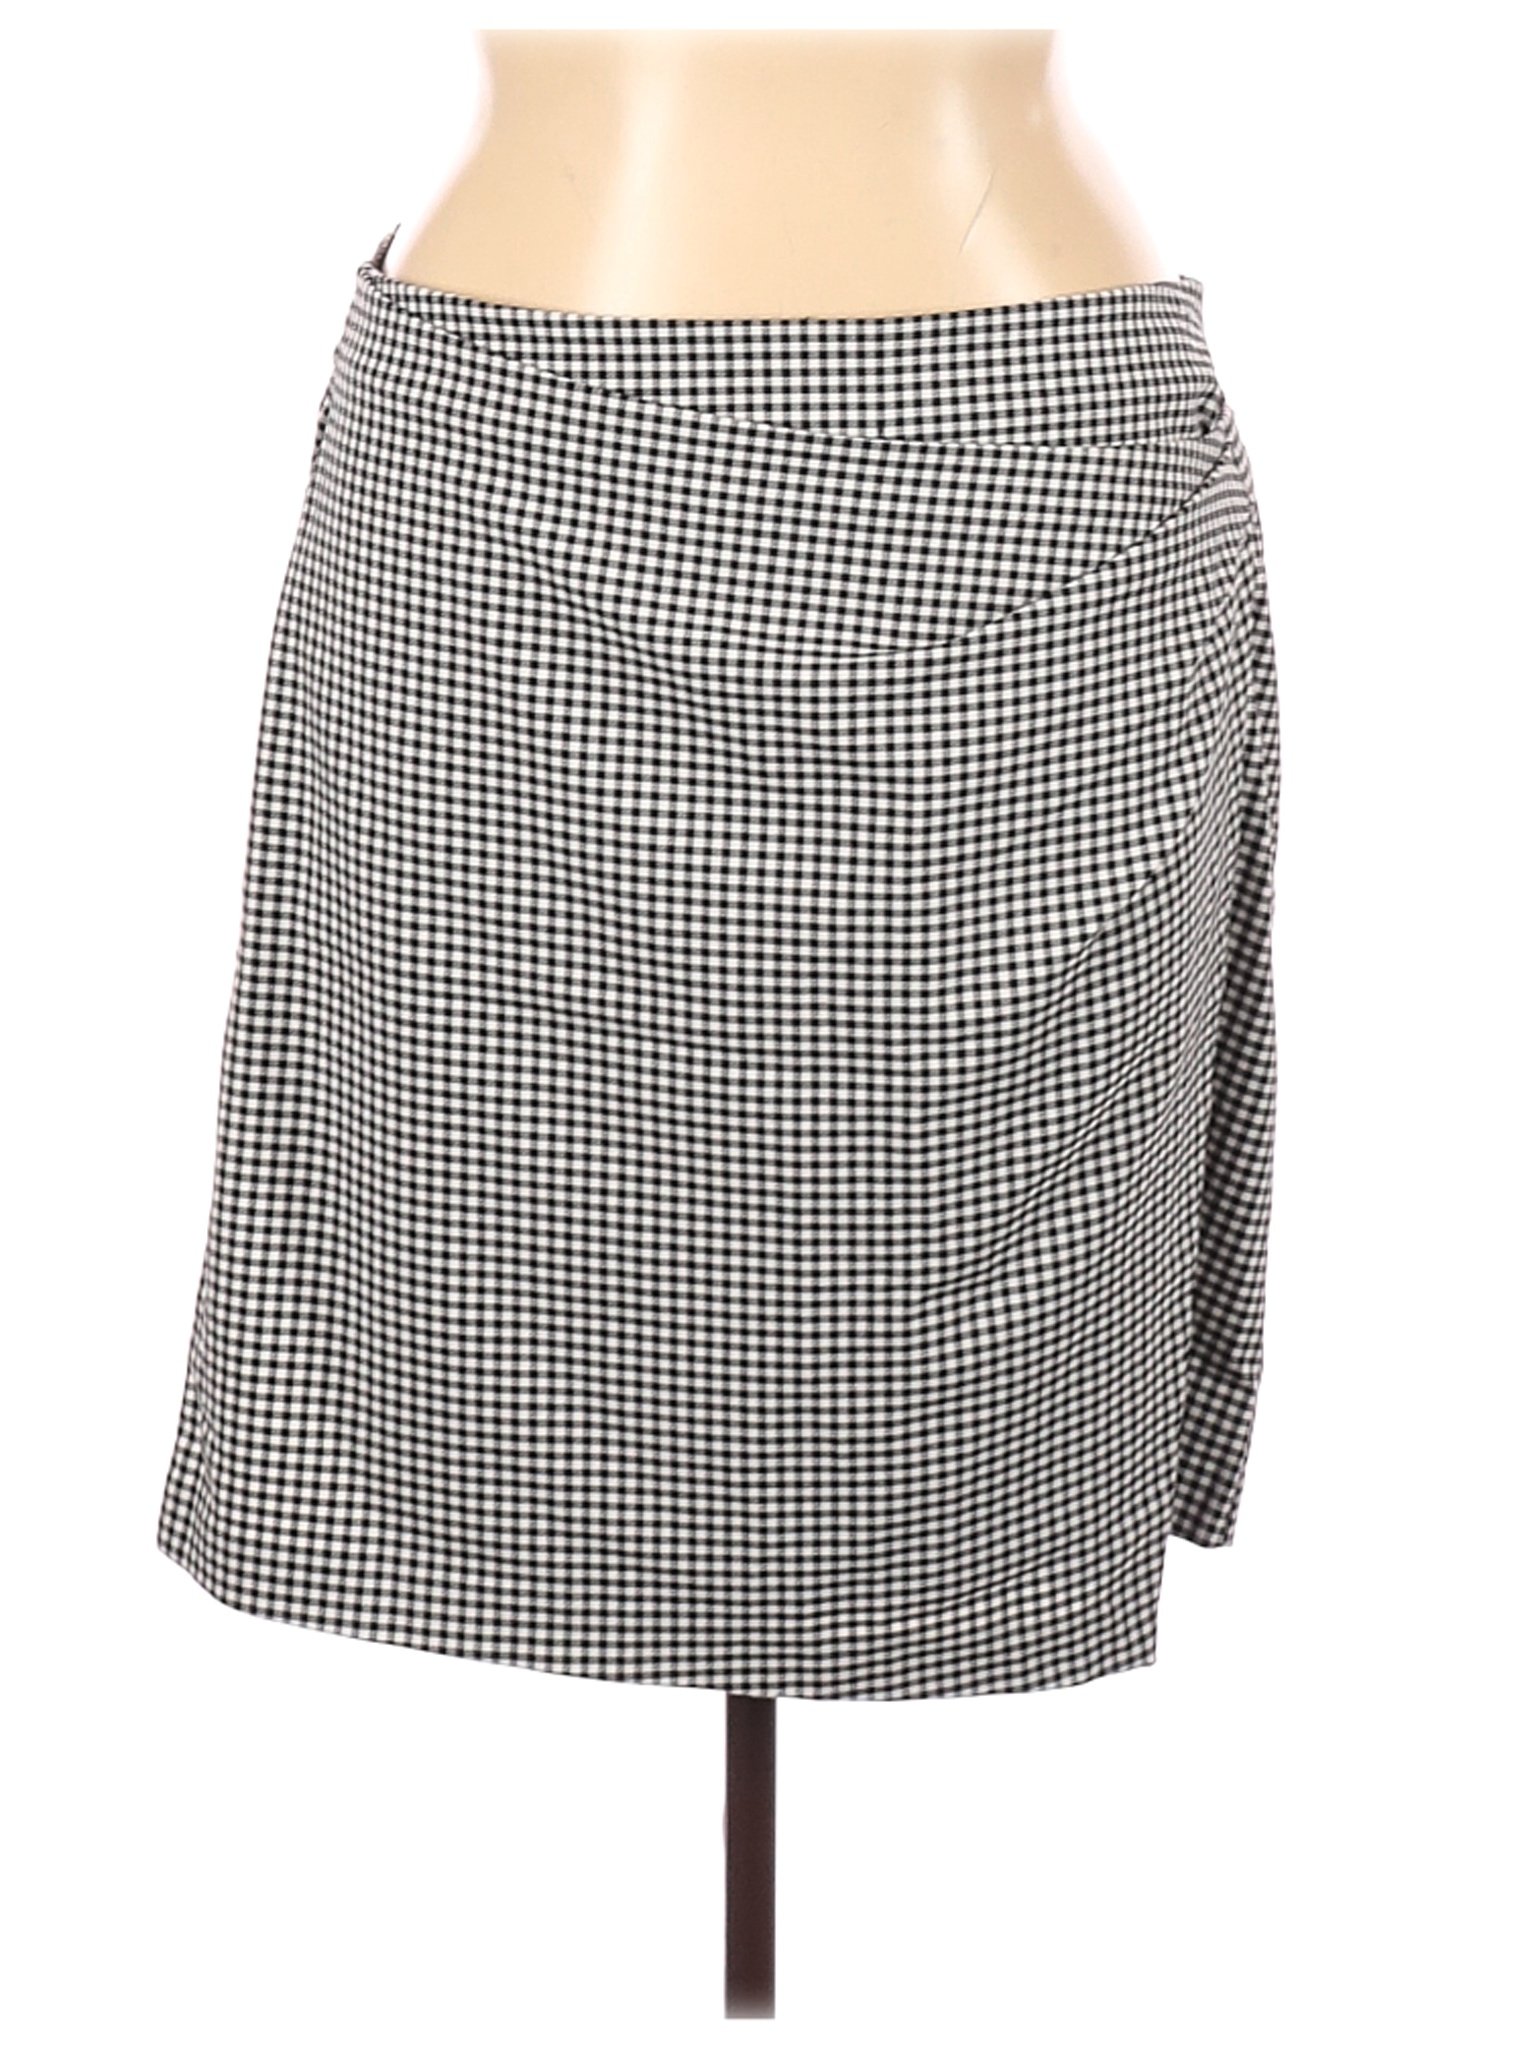 J.jill Women Black Casual Skirt XL Petites | eBay